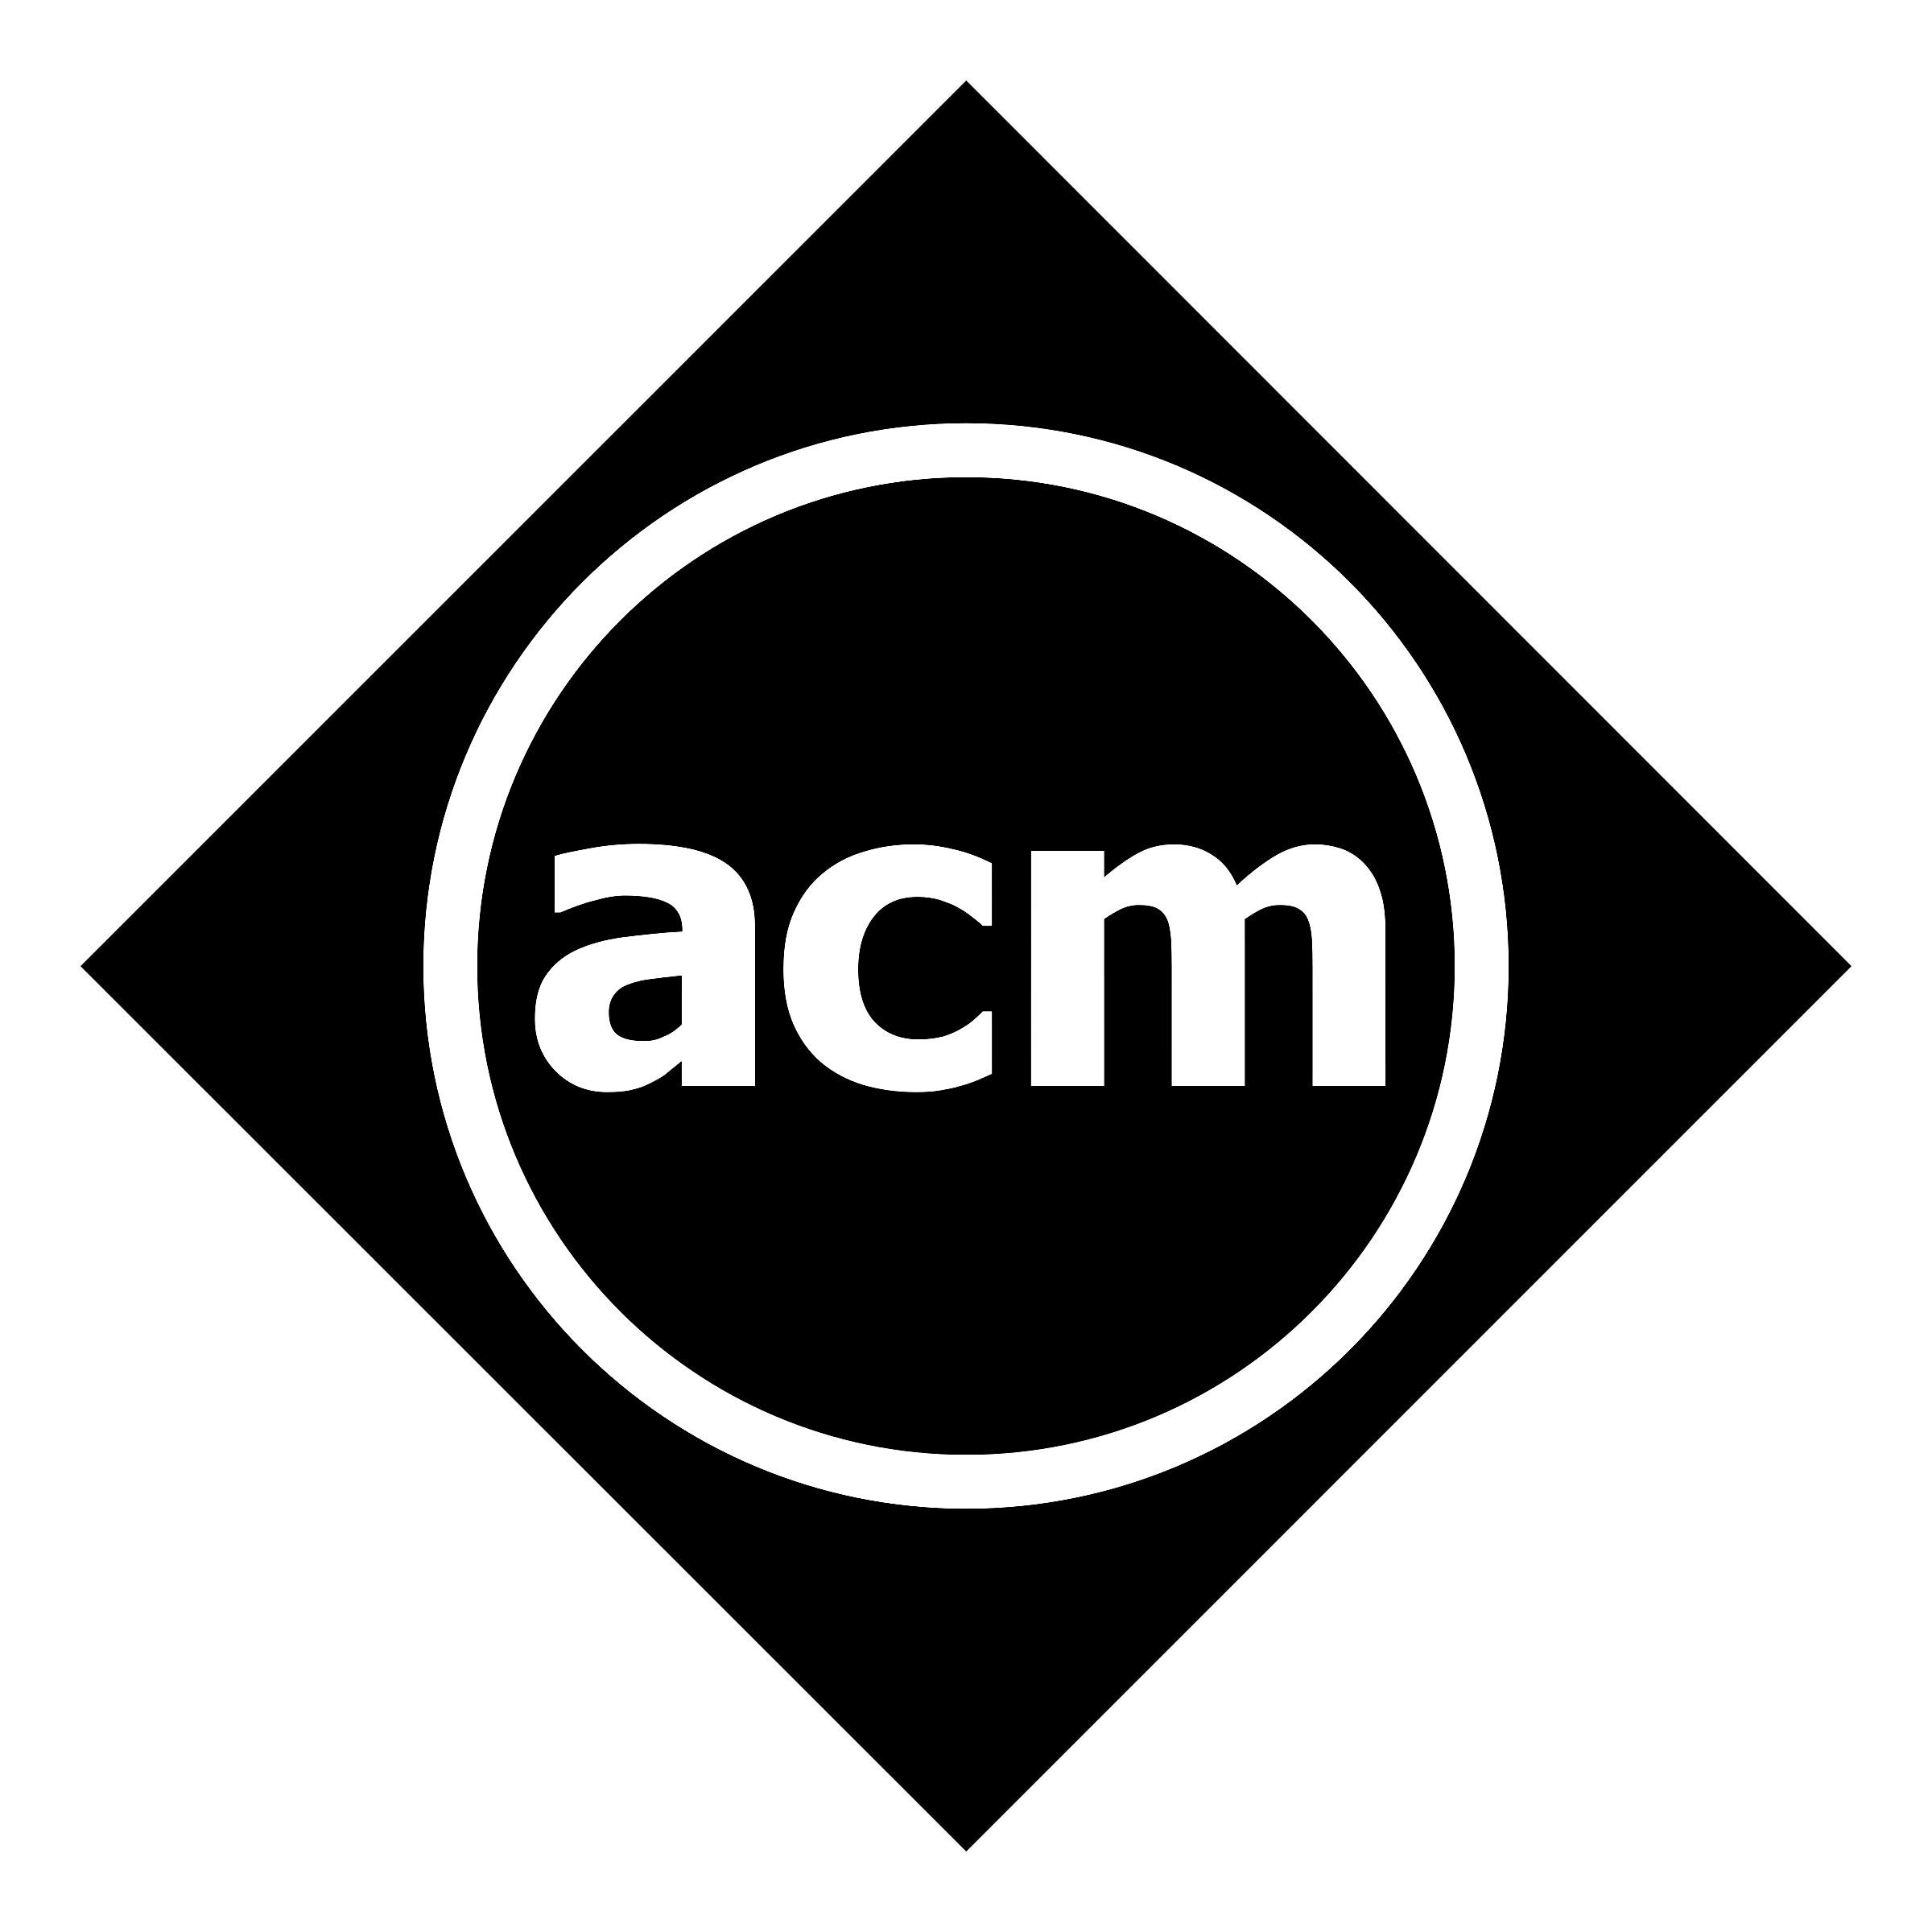 ACM Logo - ACM Logo PNG Transparent & SVG Vector